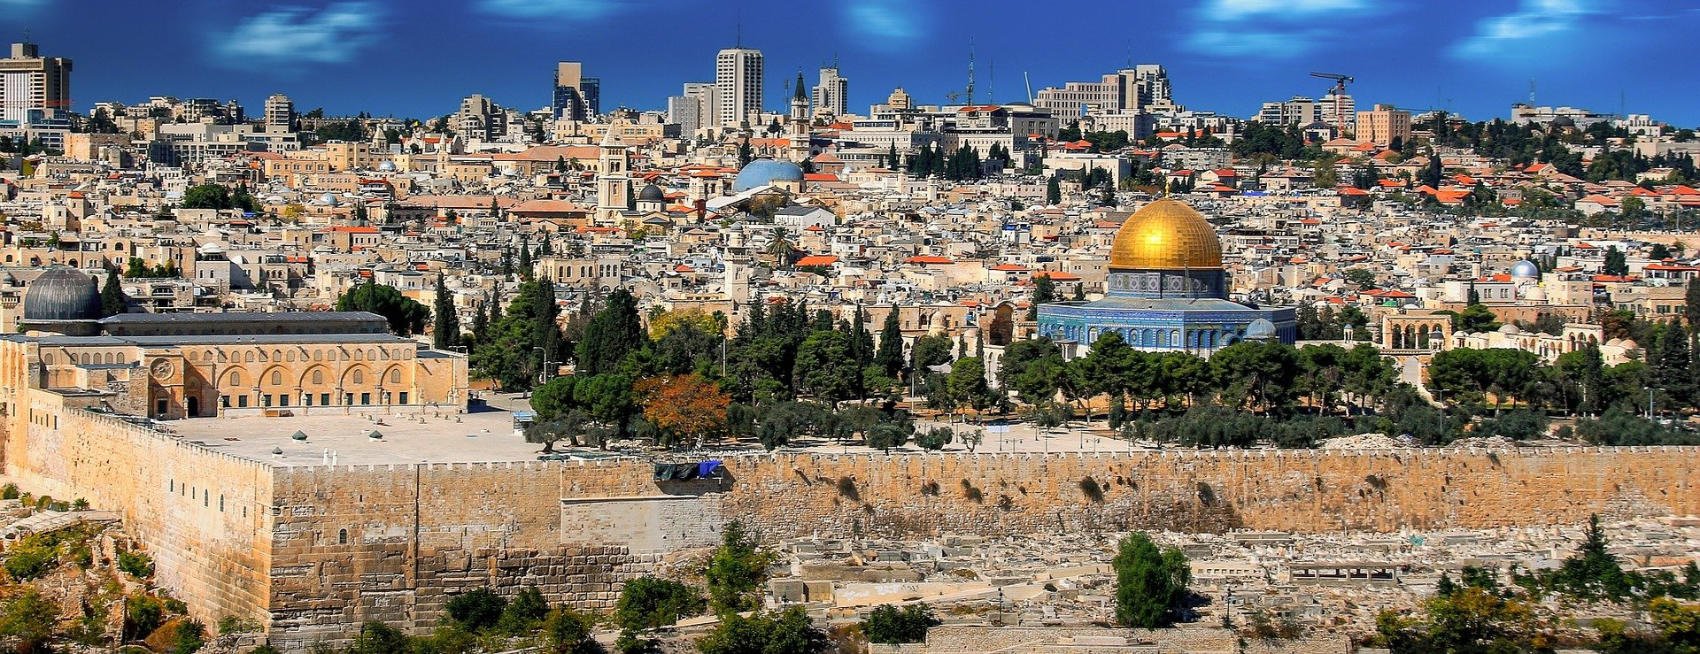 Jerusalem - Image by Walkerssk